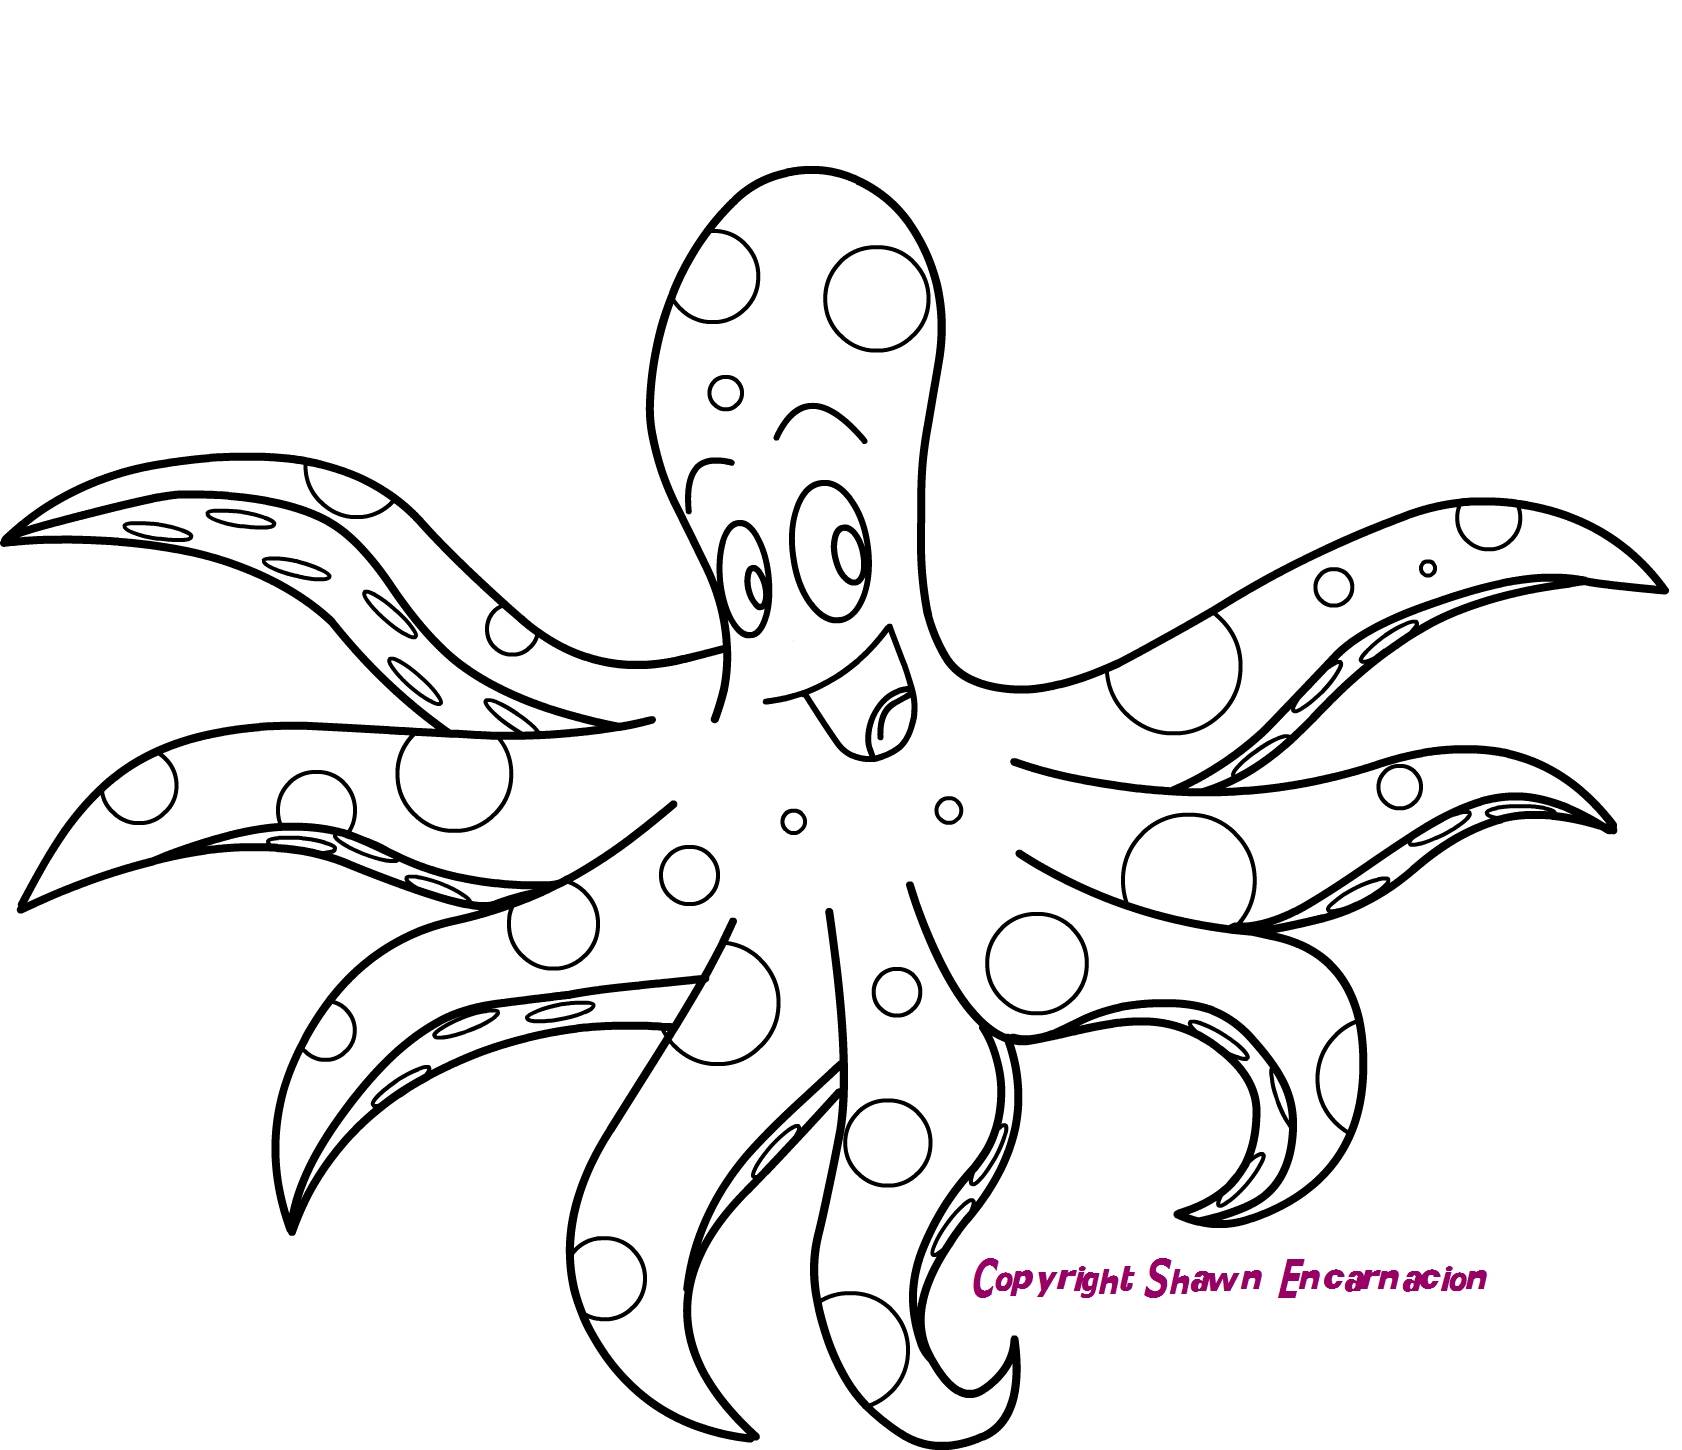 Results for Cartoon Octopus Drawing | imagebasket.net